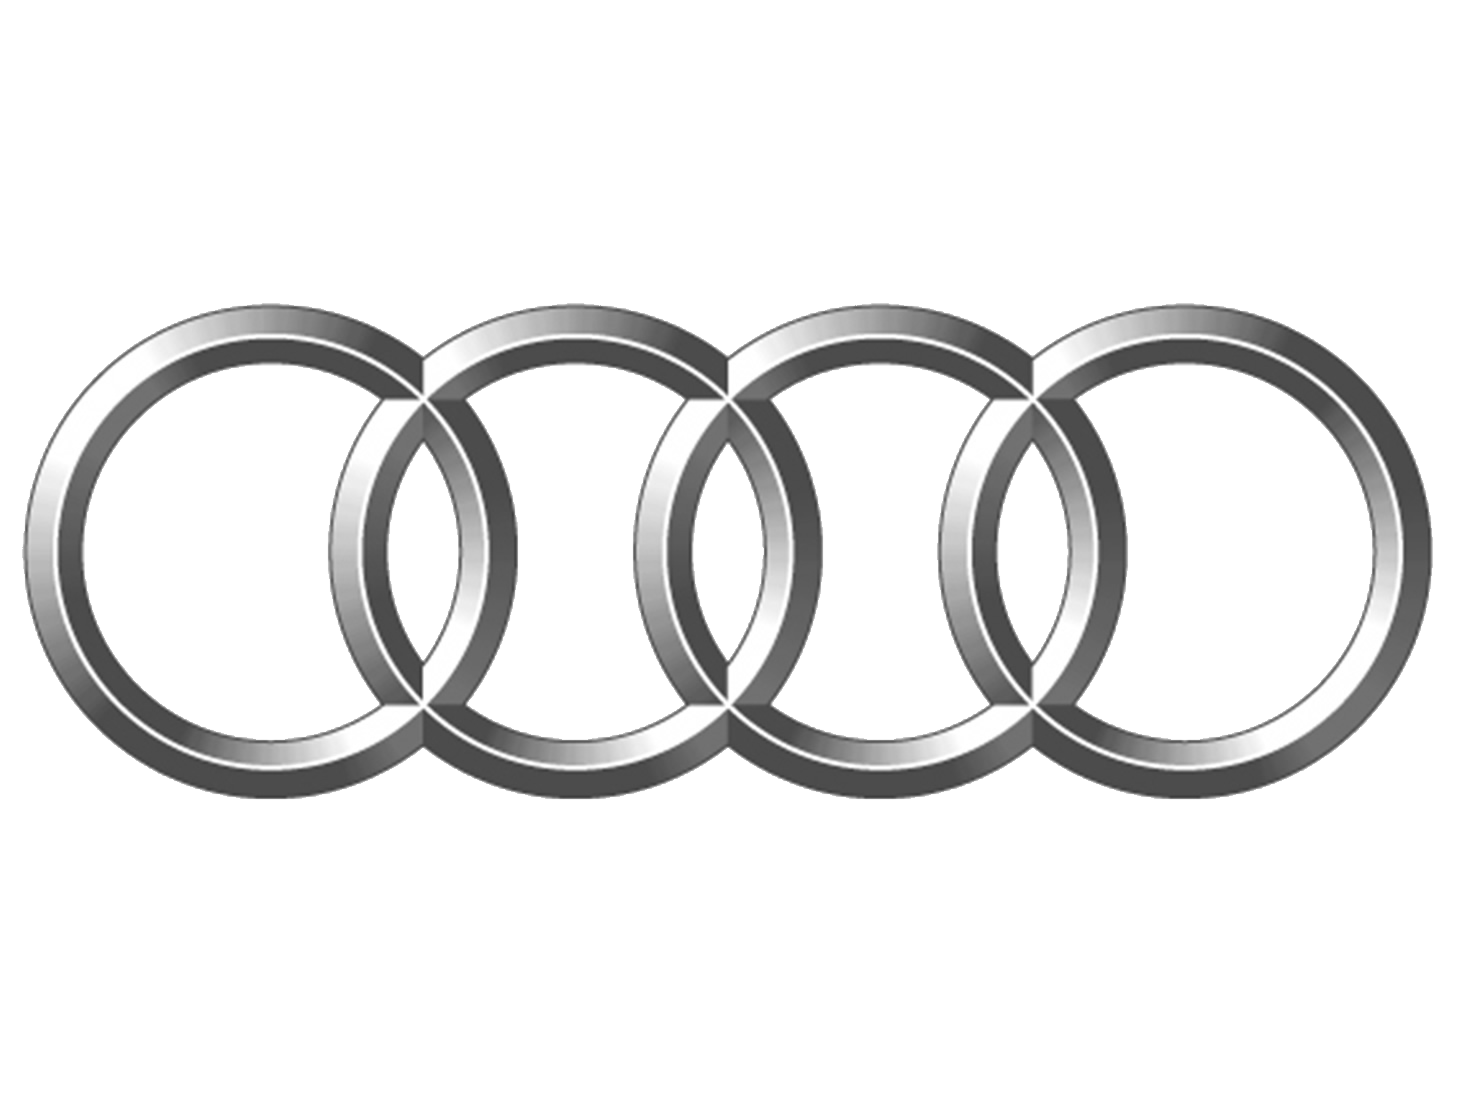 Download Audi Car Logo Png Image For Free